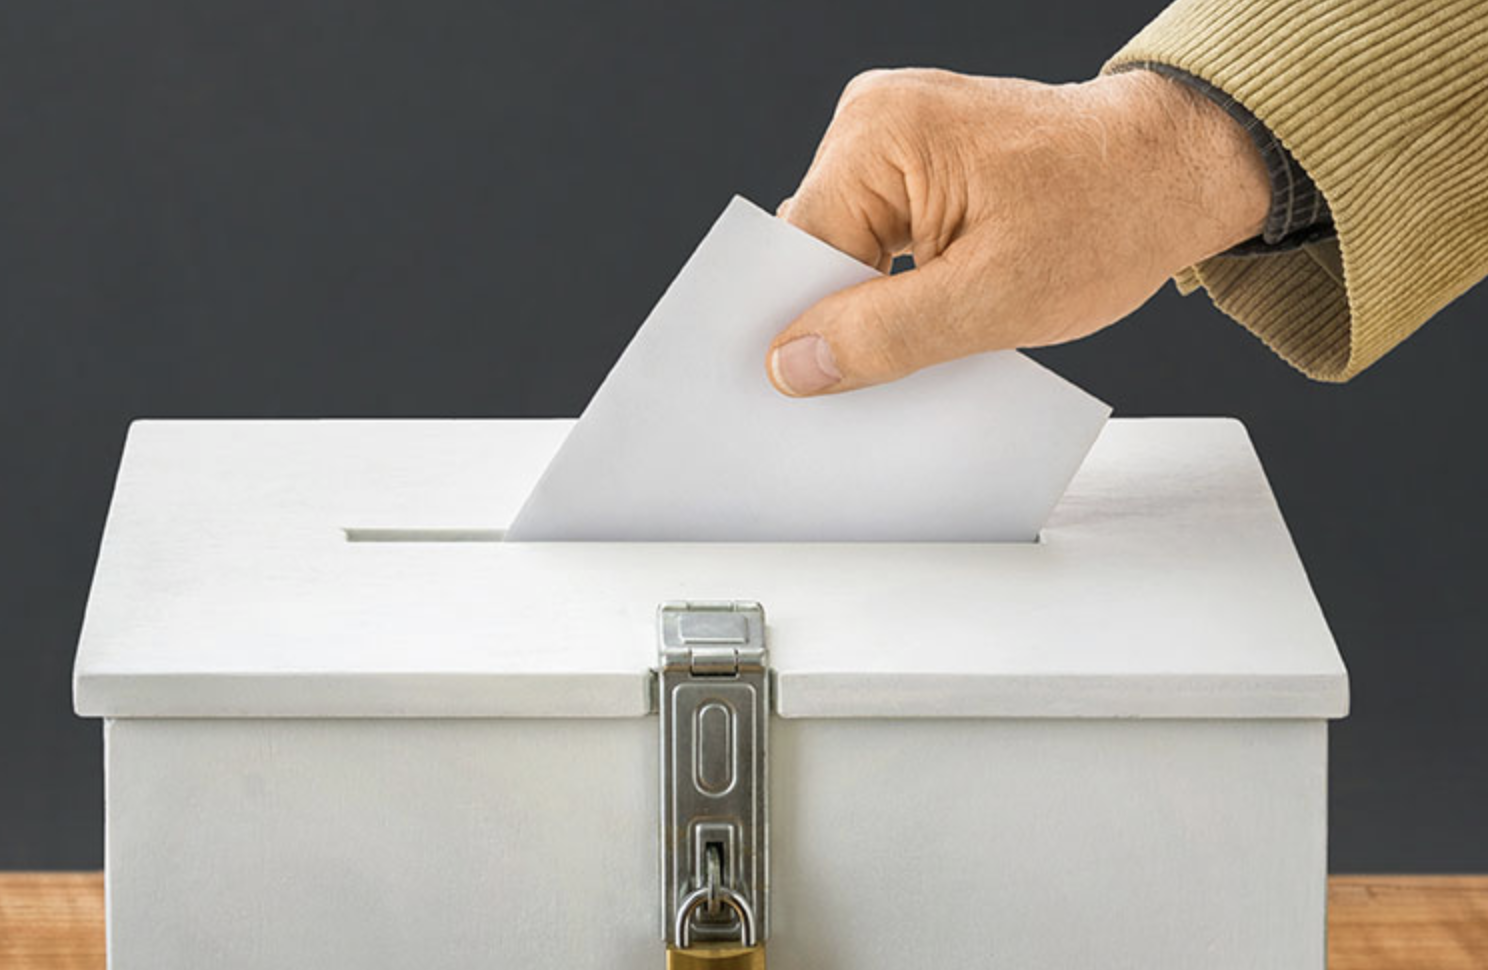 image of voter placing ballot in ballot box